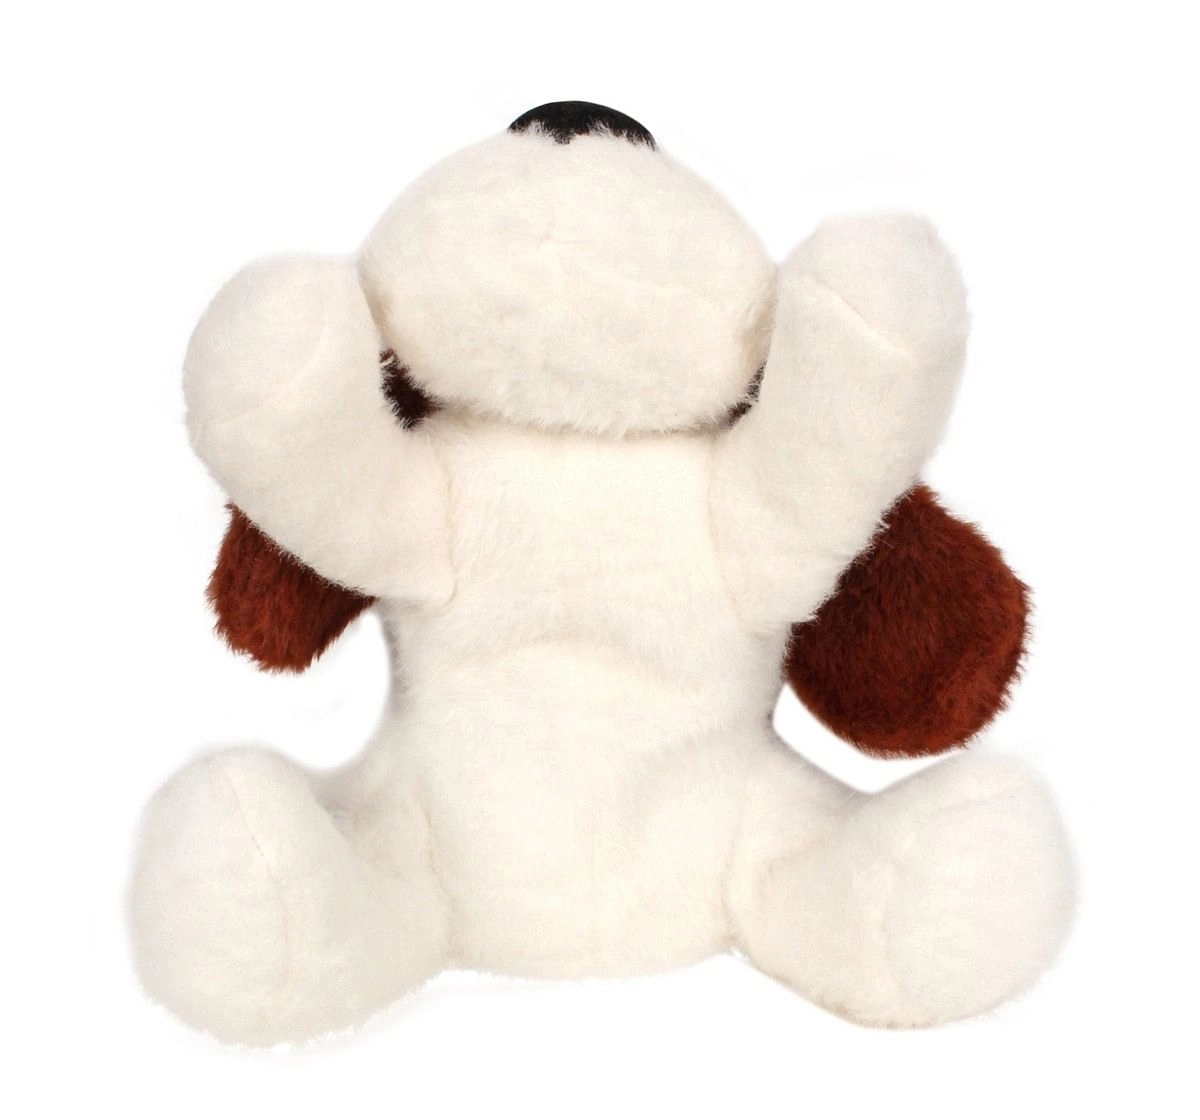 Fuzzbuzz Soft Lying Dog - Dark Brown - 33Cm Quirky Soft Toys for Kids age 0M+ - 15 Cm (Dark Brown)